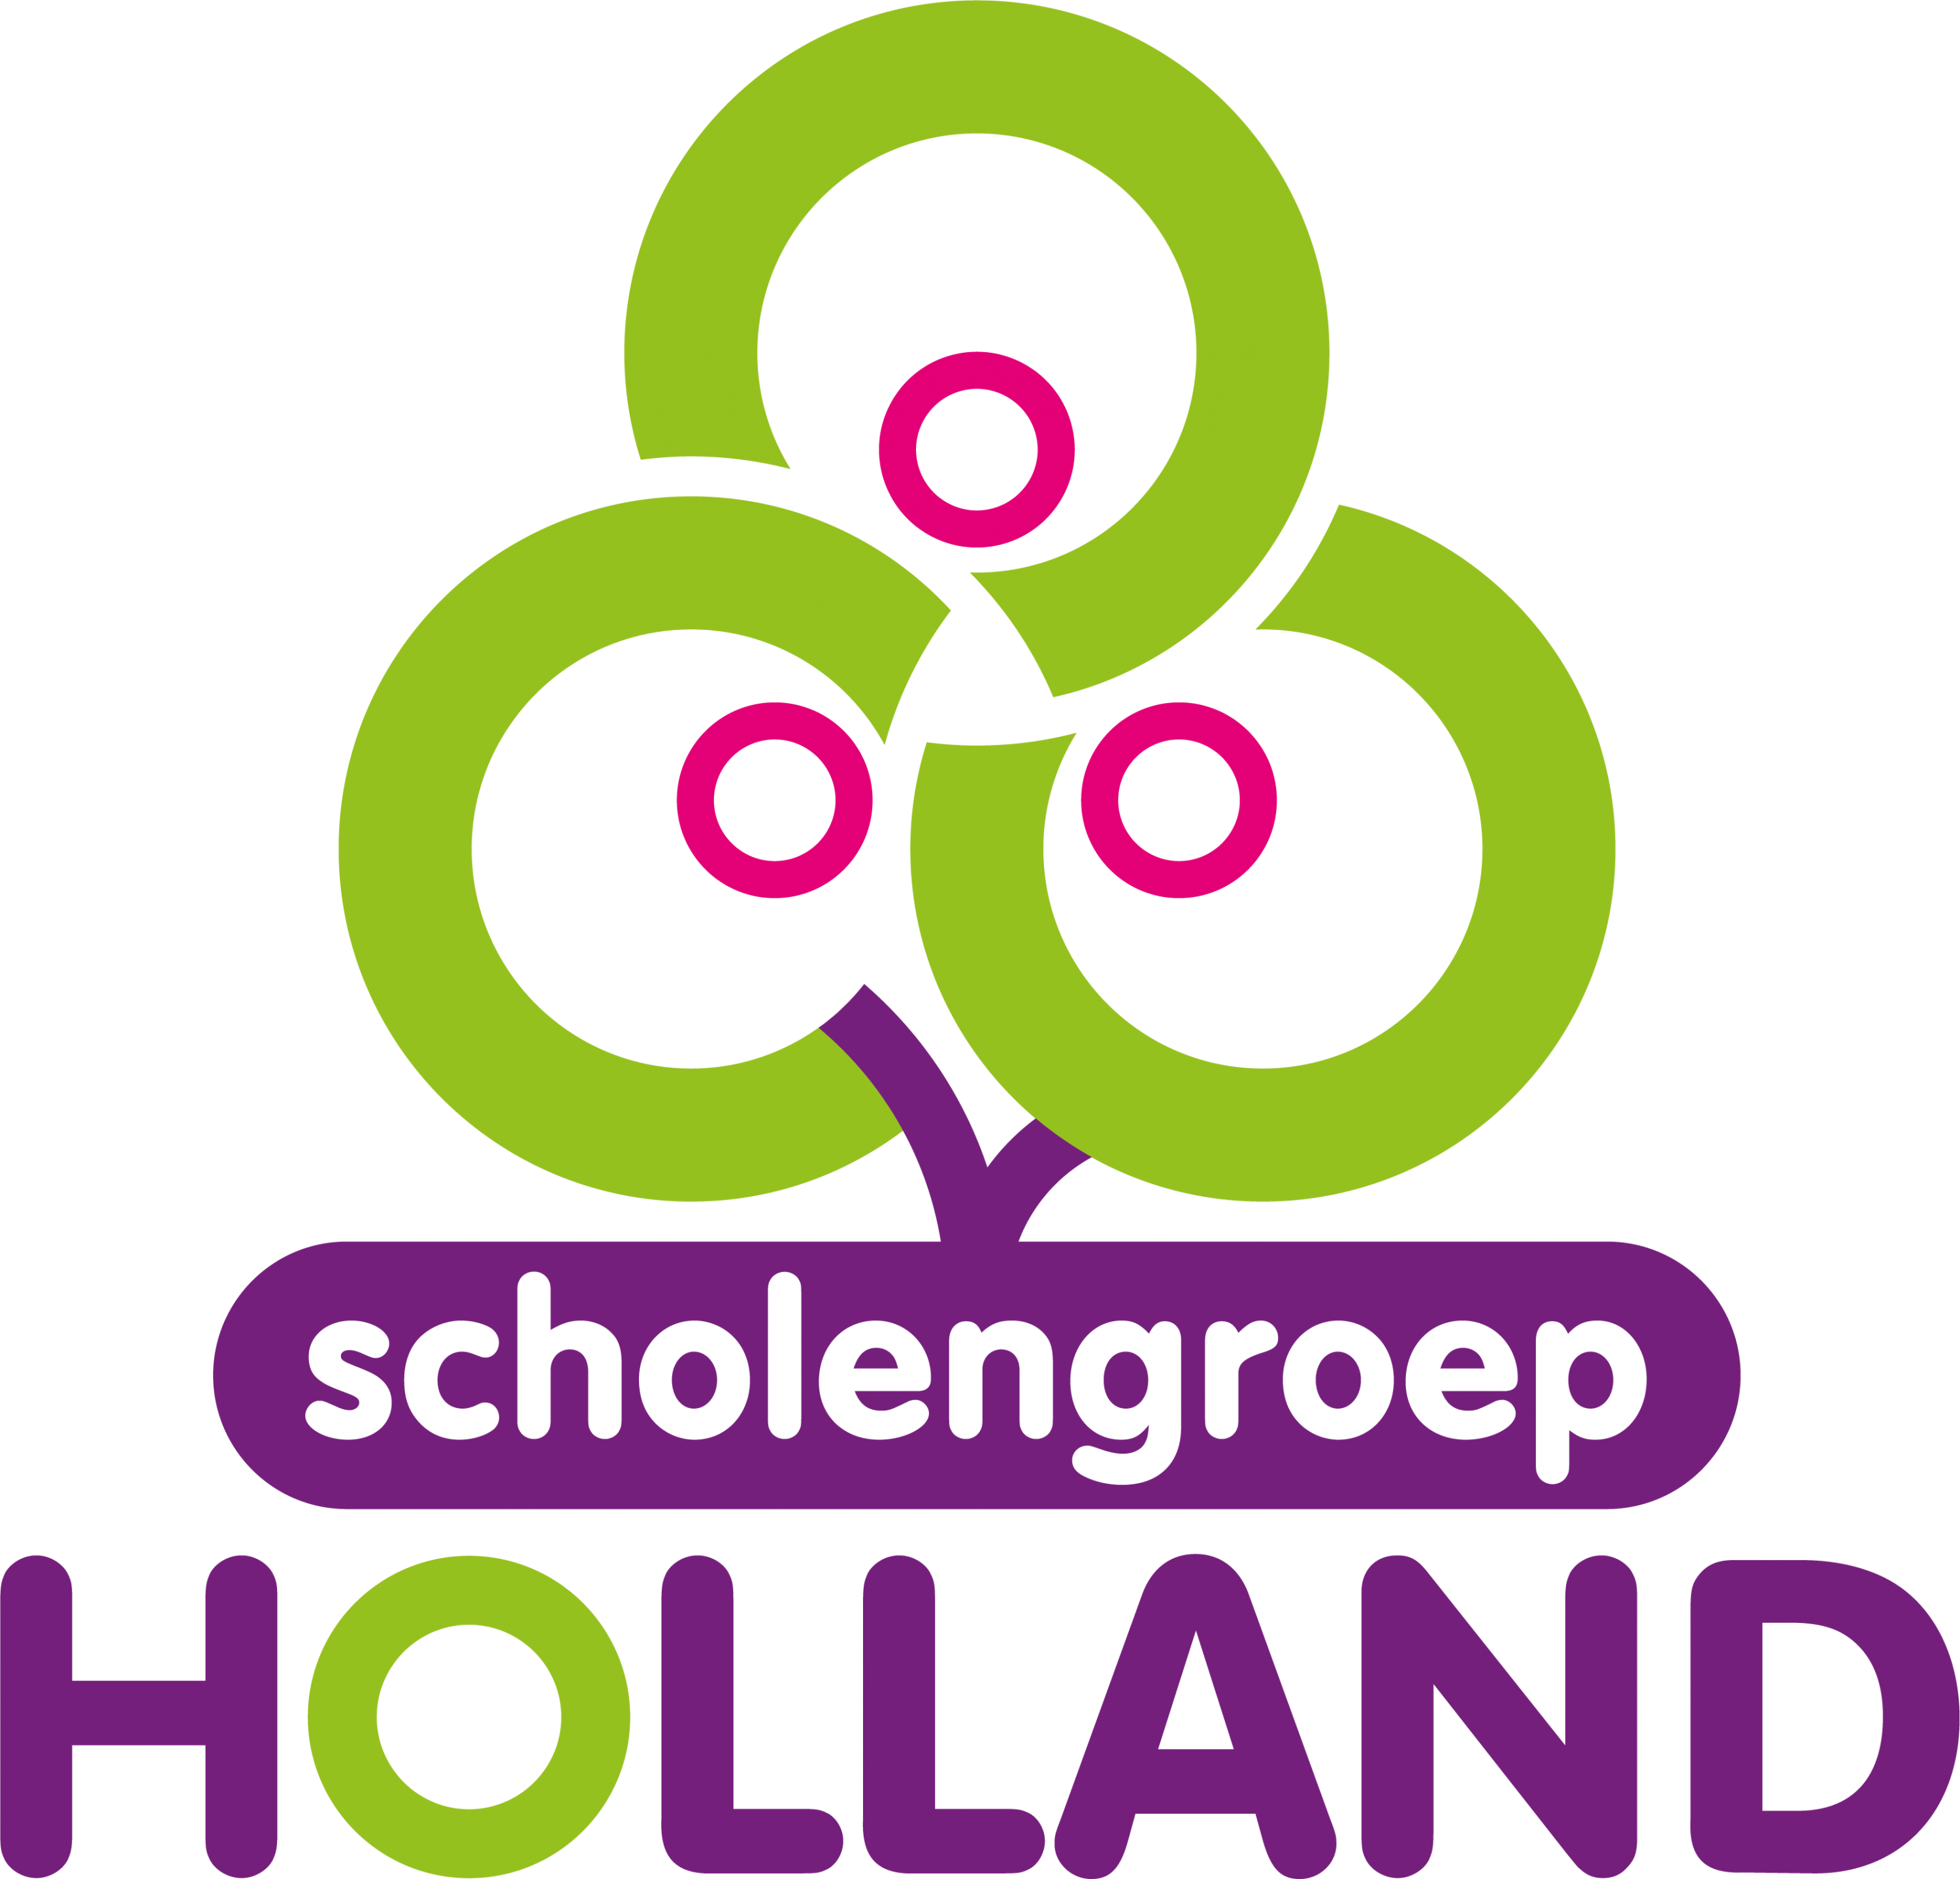 scholengroep-holland-logo.png